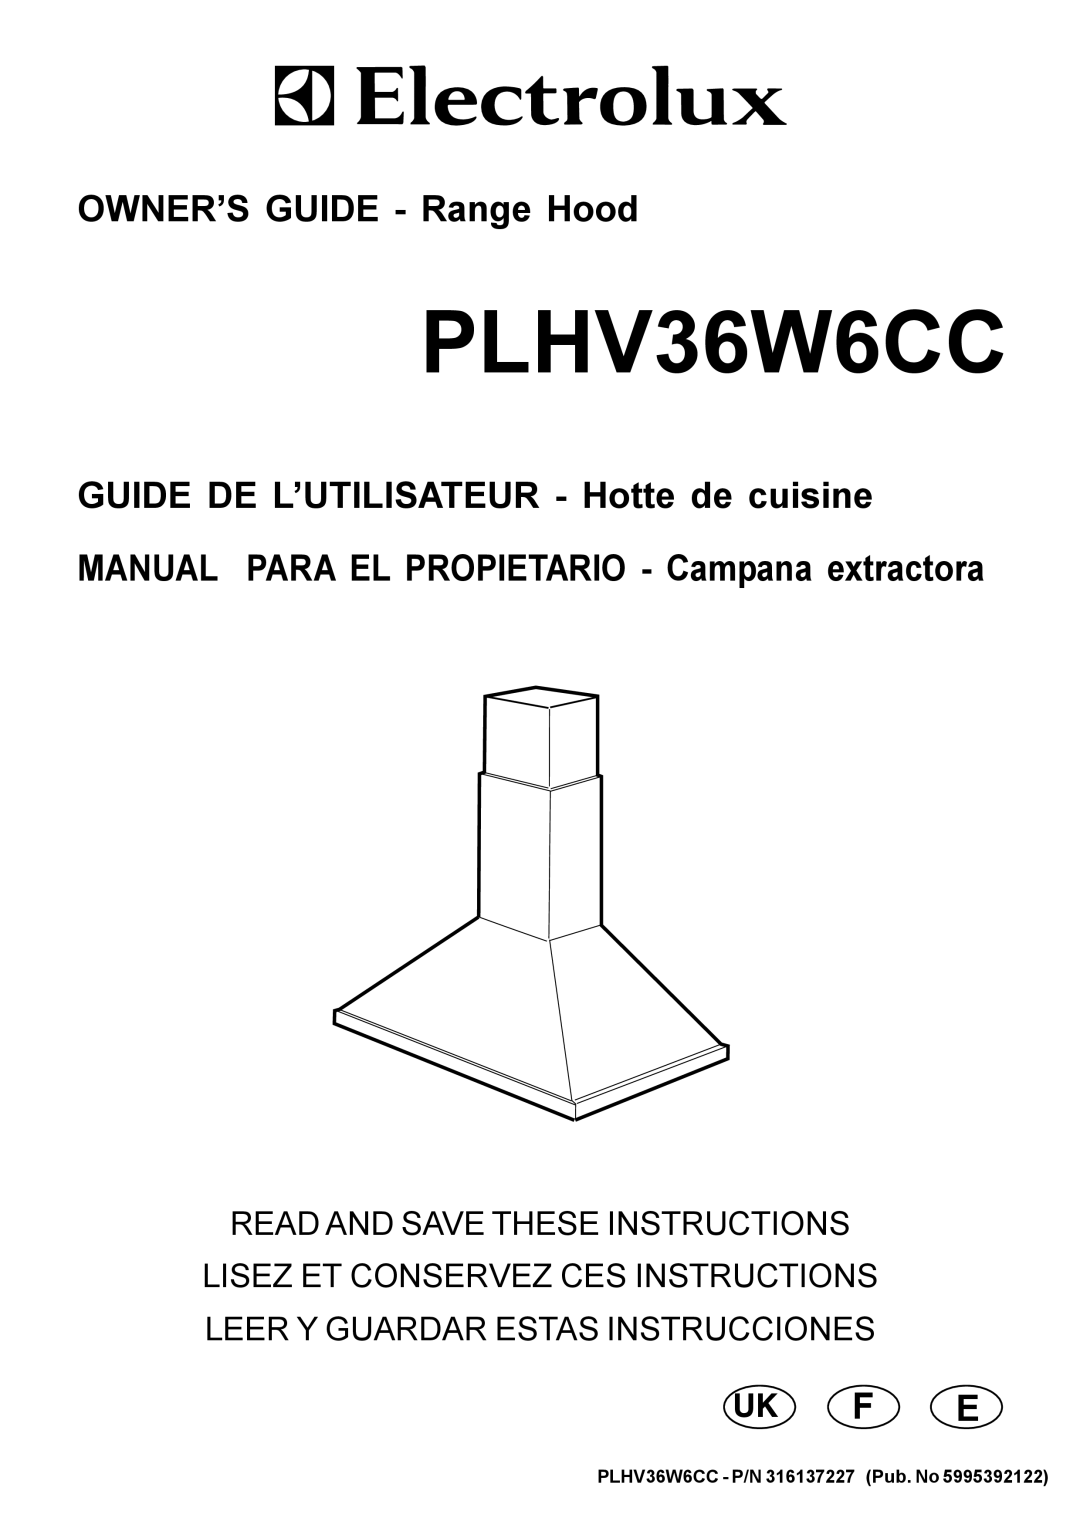 Electrolux PLHV36W6CC manual OWNER’S GUIDE - Range Hood, Leer Y Guardar Estas Instrucciones, Uk F E 